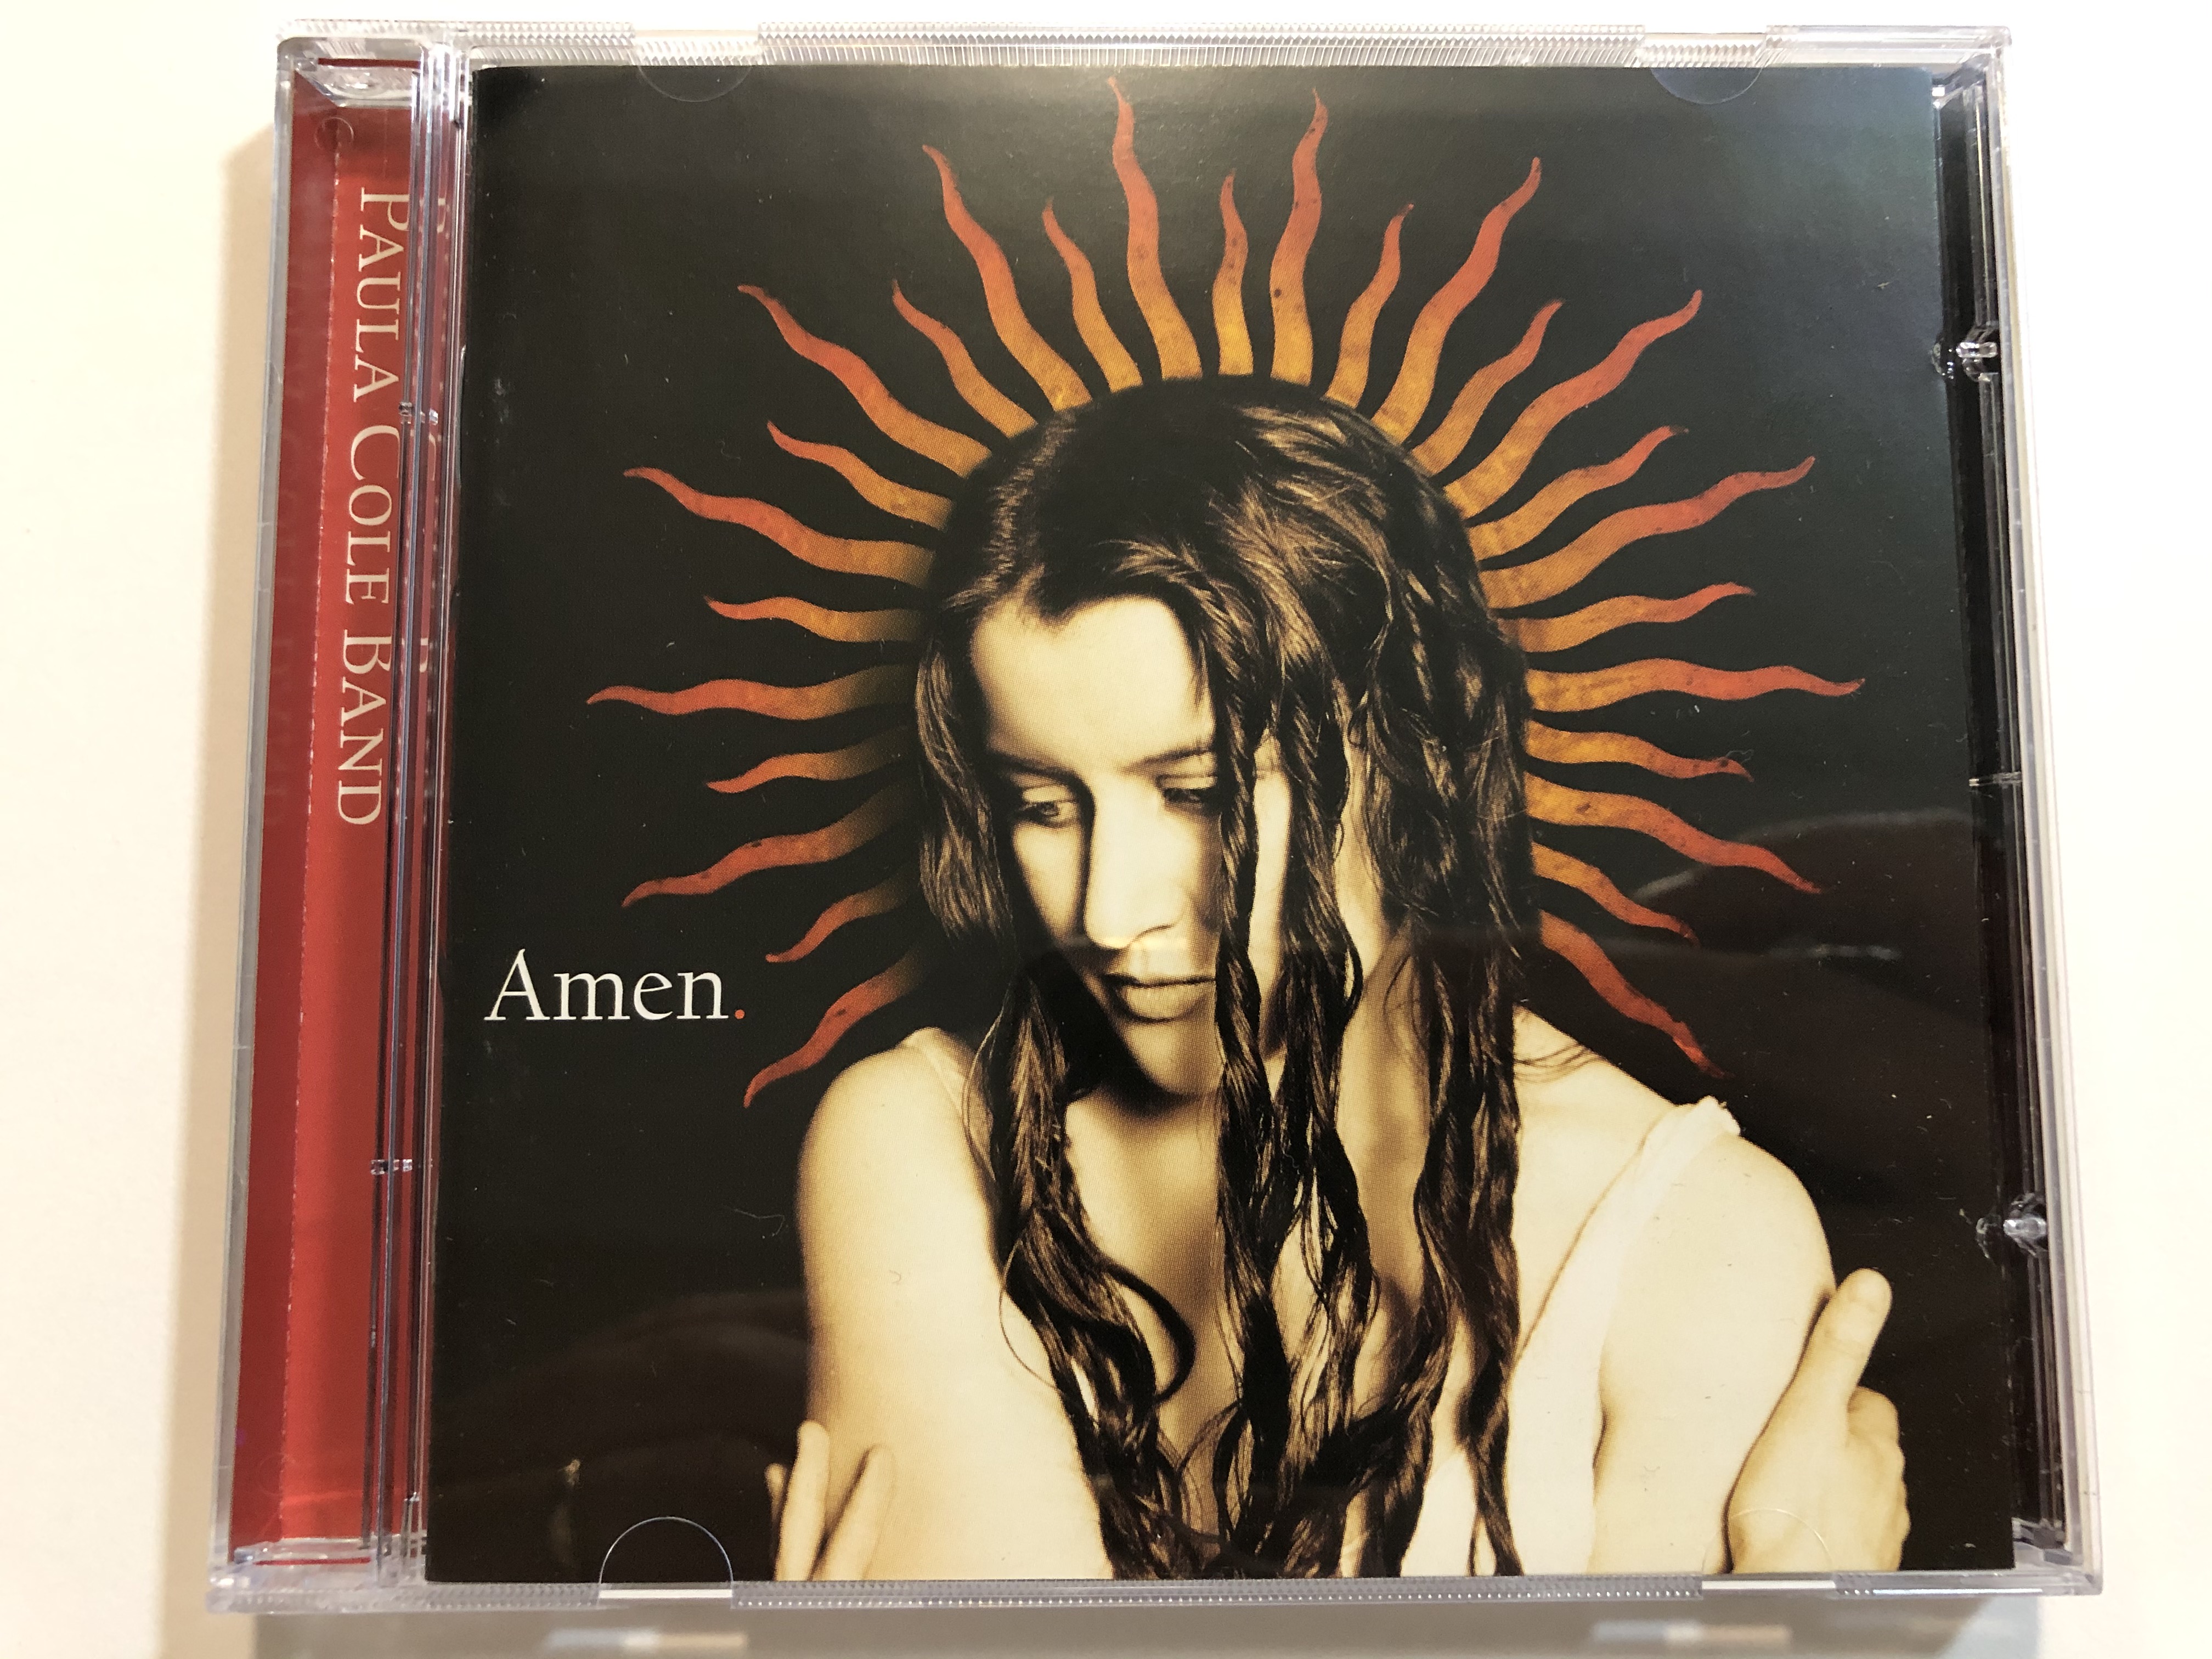 paula-cole-band-amen-imago-audio-cd-1999-9362-47490-2-1-.jpg